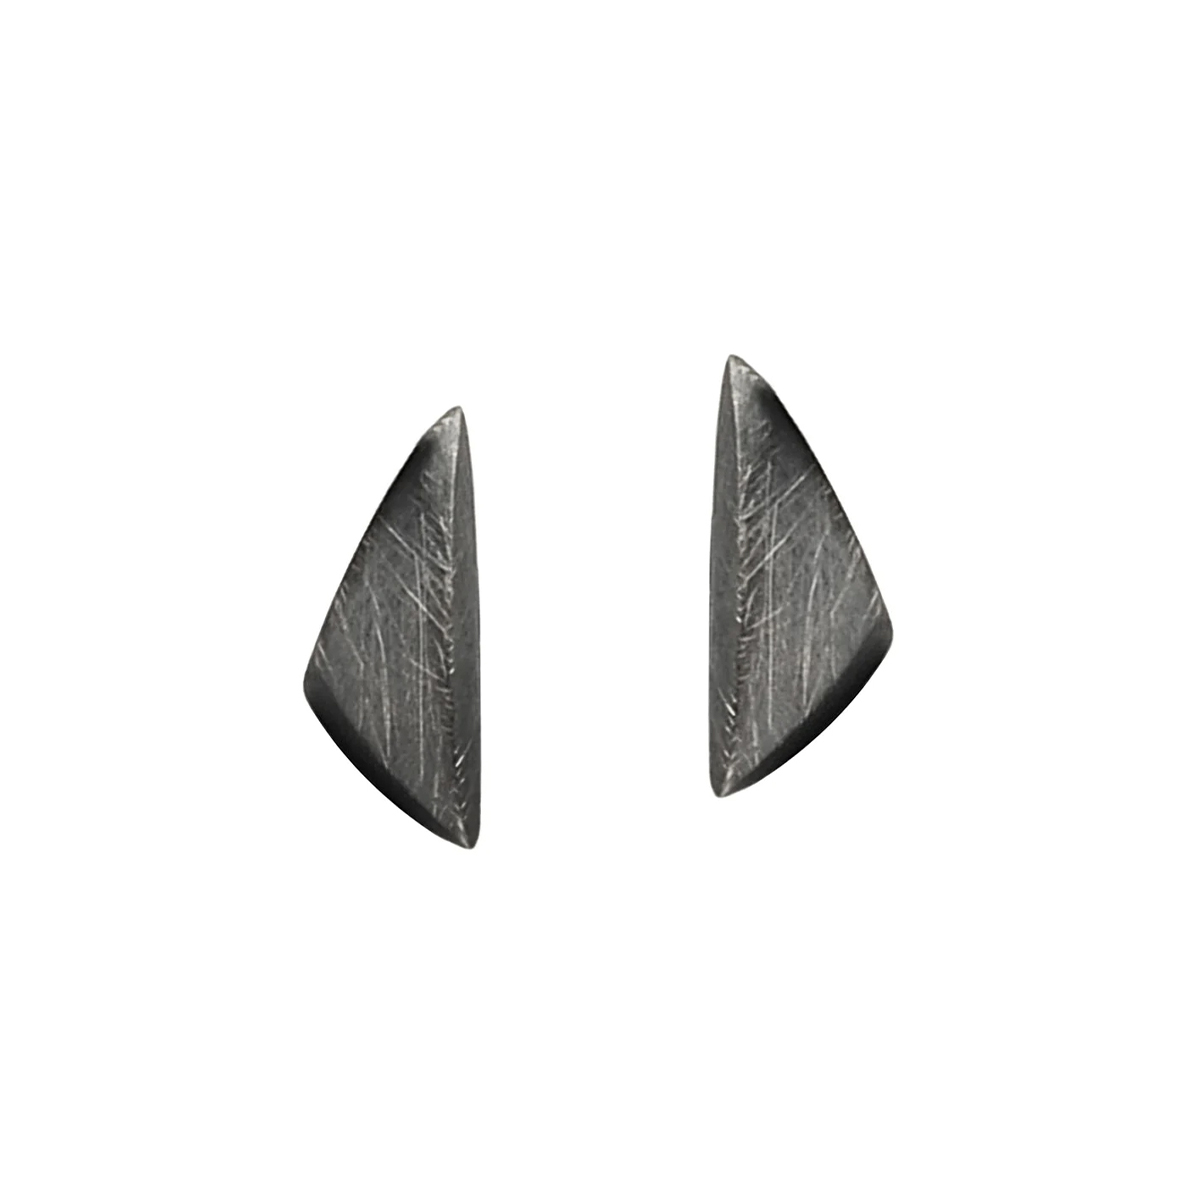 Oxidized Sterling Silver Triangle Stud Earrings